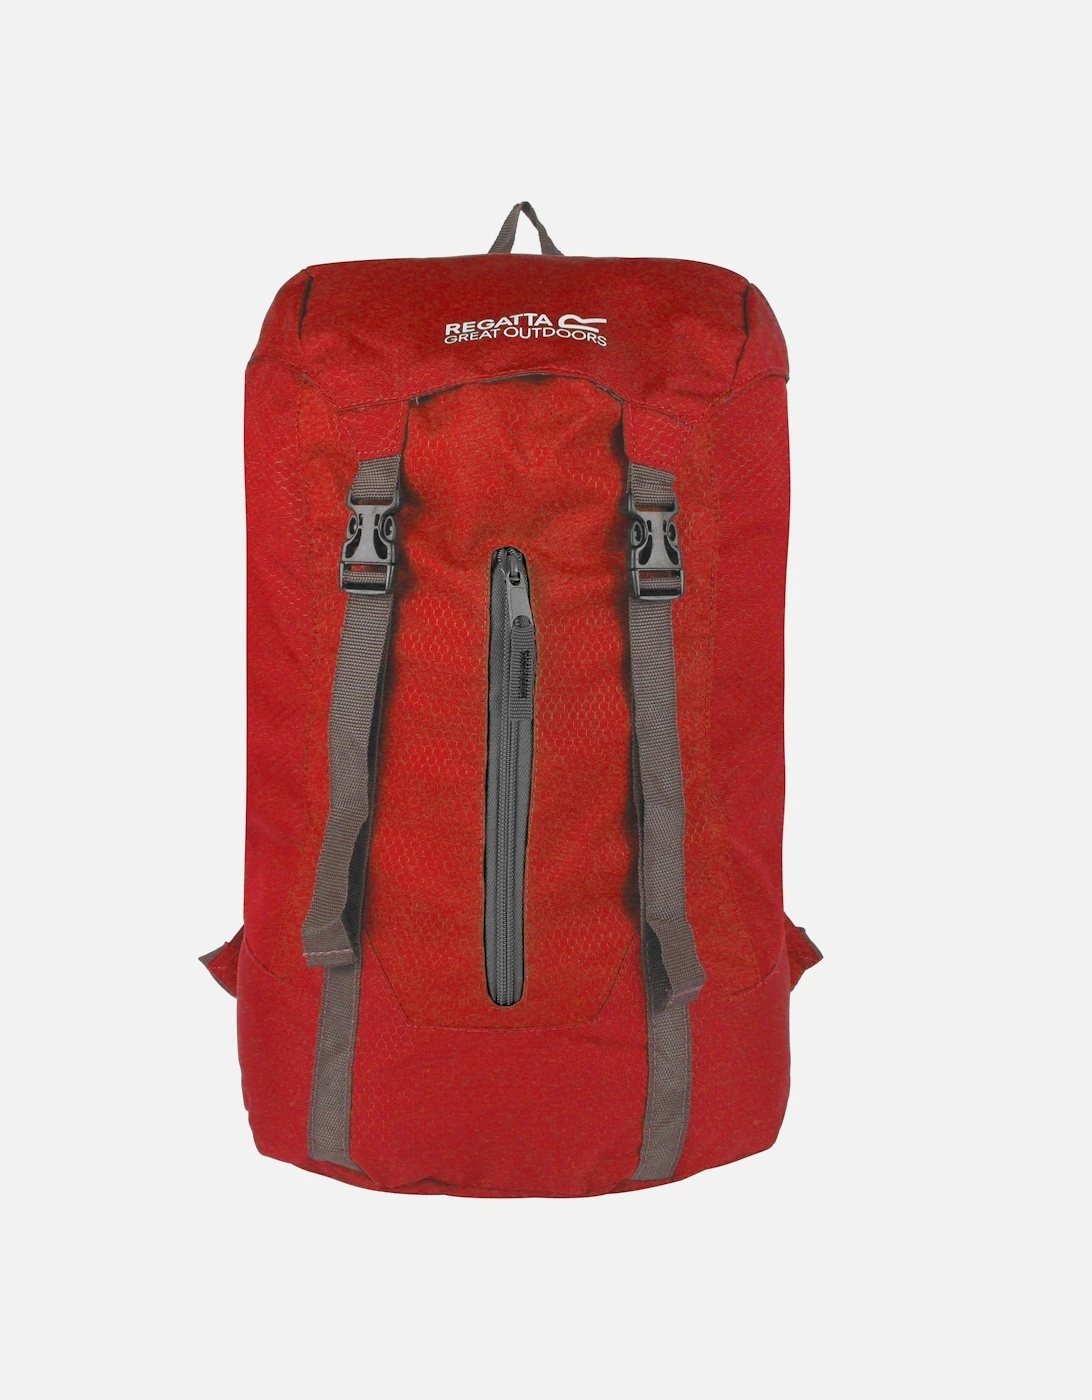 Great Outdoors Easypack Packaway Rucksack/Backpack (25 Litres), 6 of 5